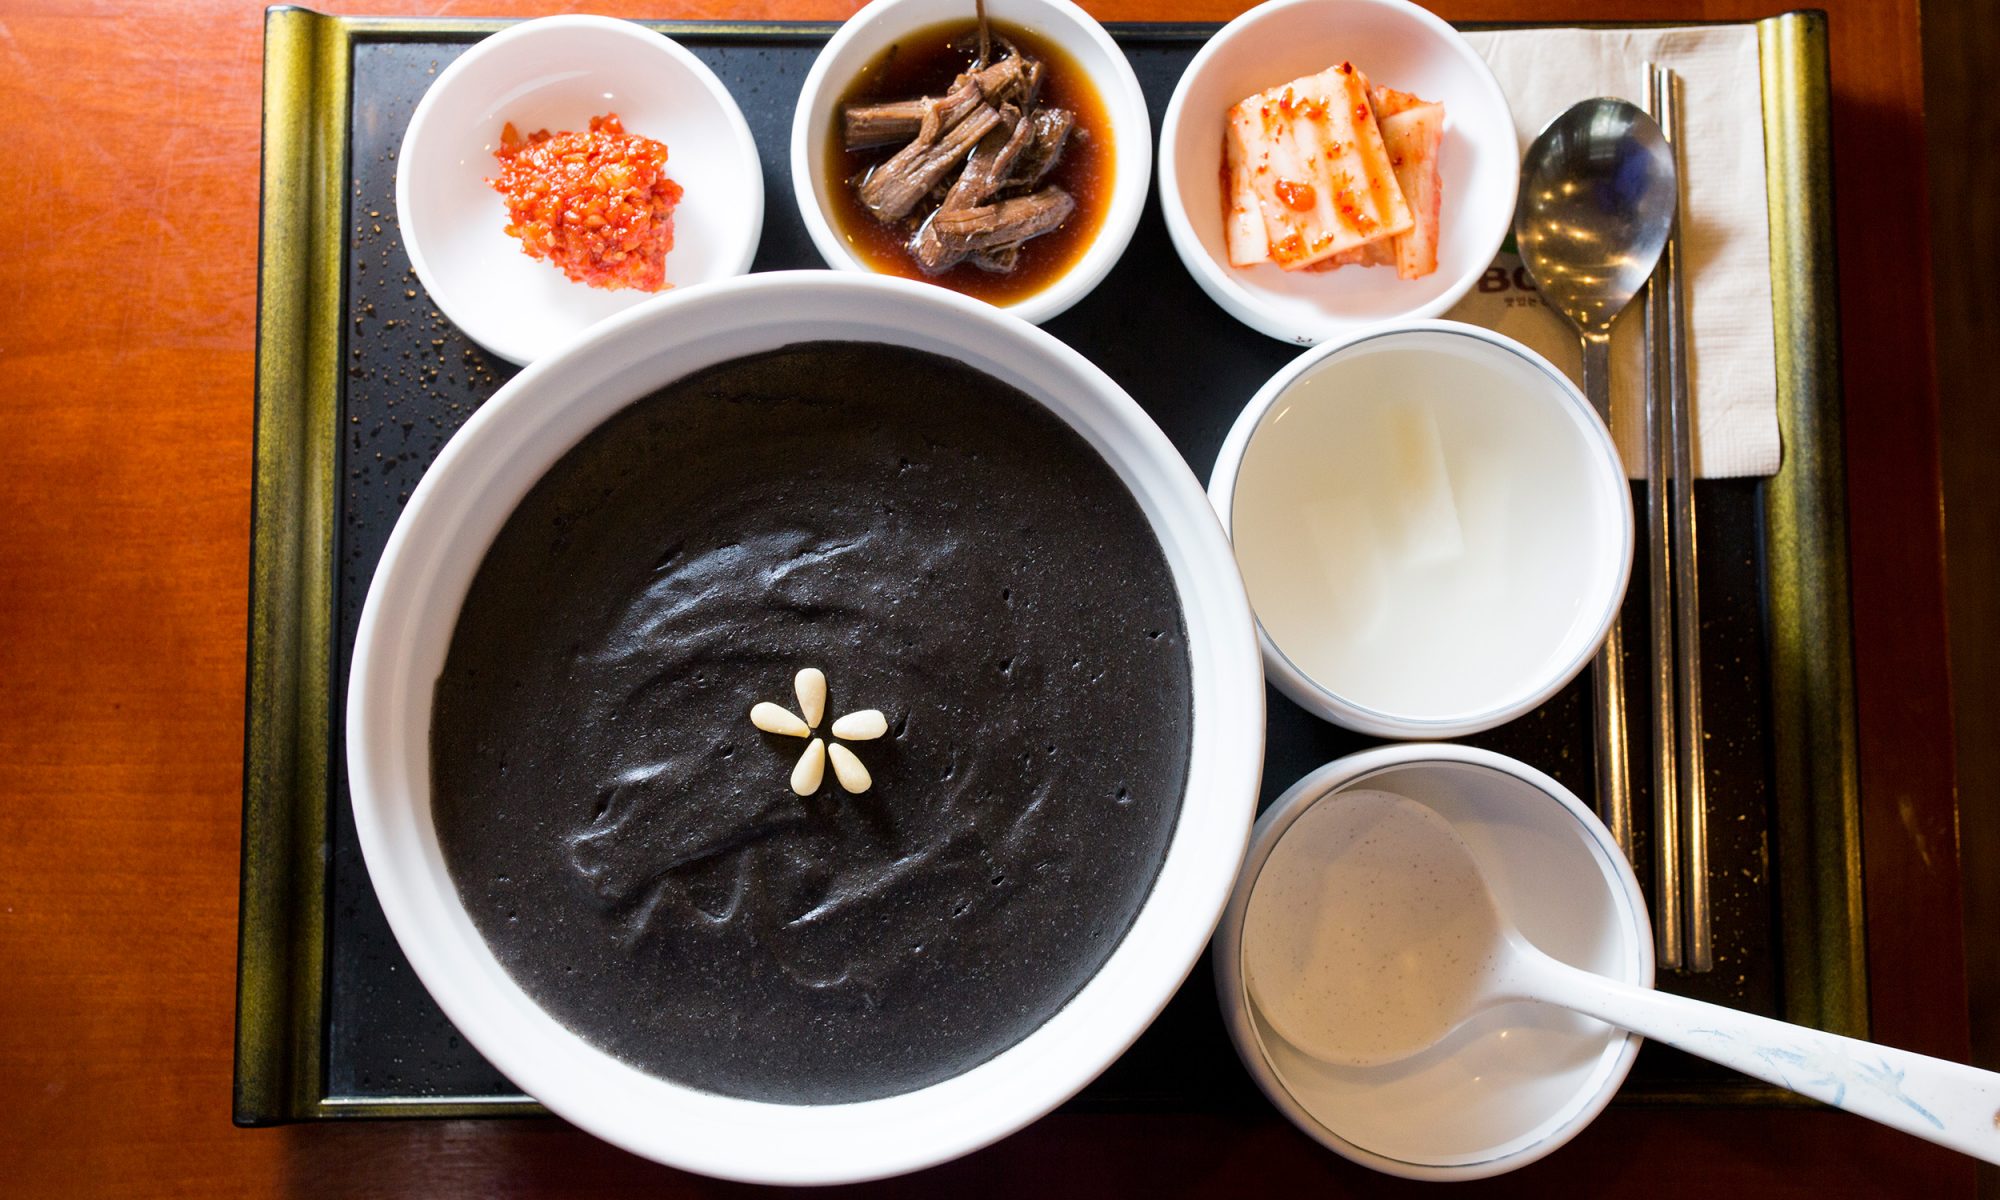 EC: Eat Korean Rice Porridge the Next Time You're Hungover